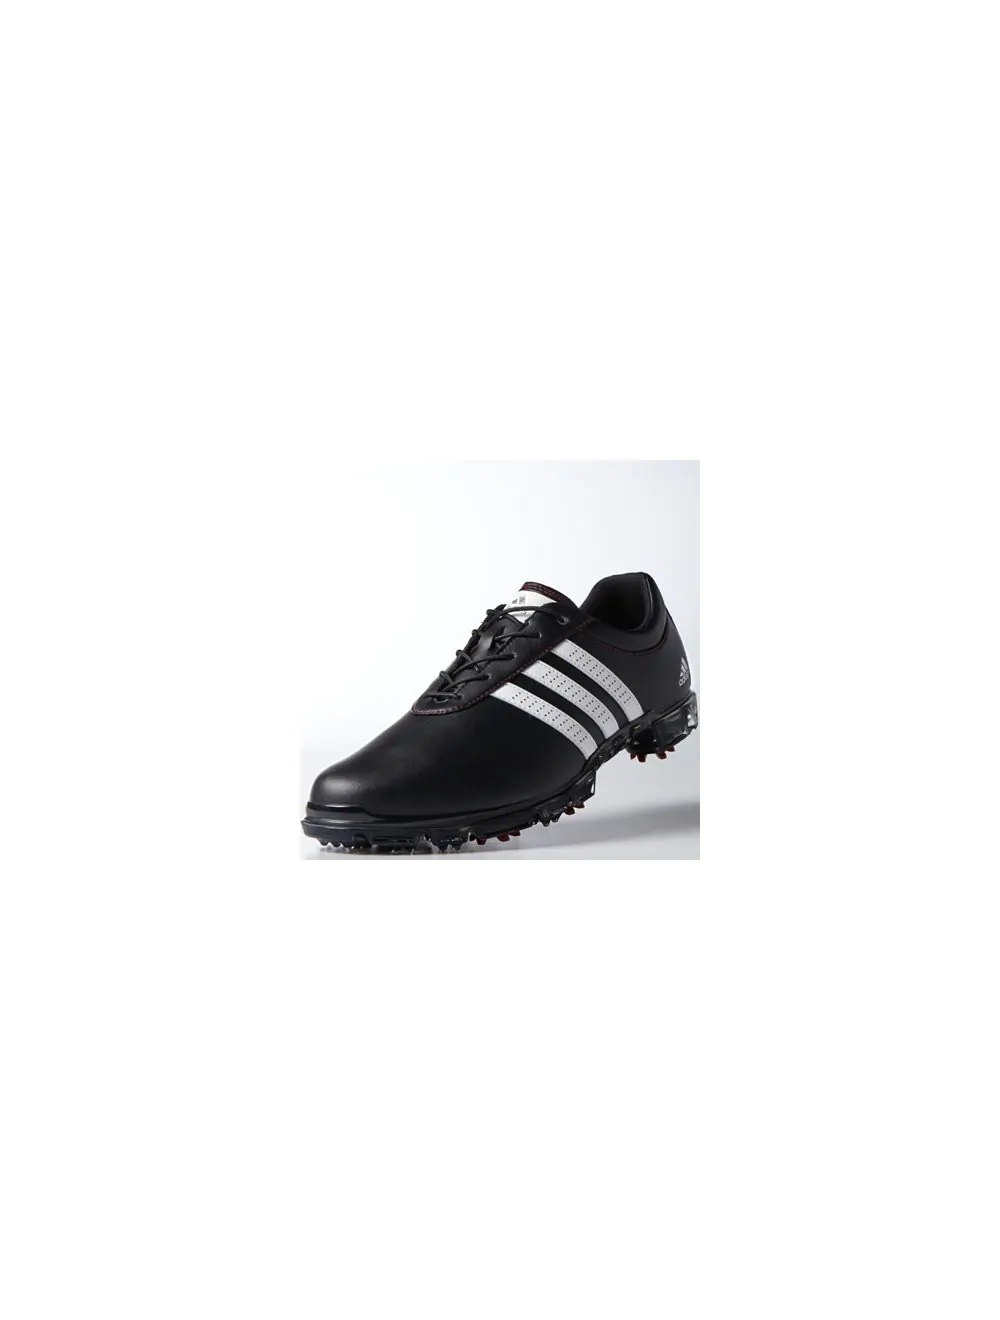 deadlock Hvem sofa adidas adipure Flex Wide Golf Shoes - Core Black/White/Red